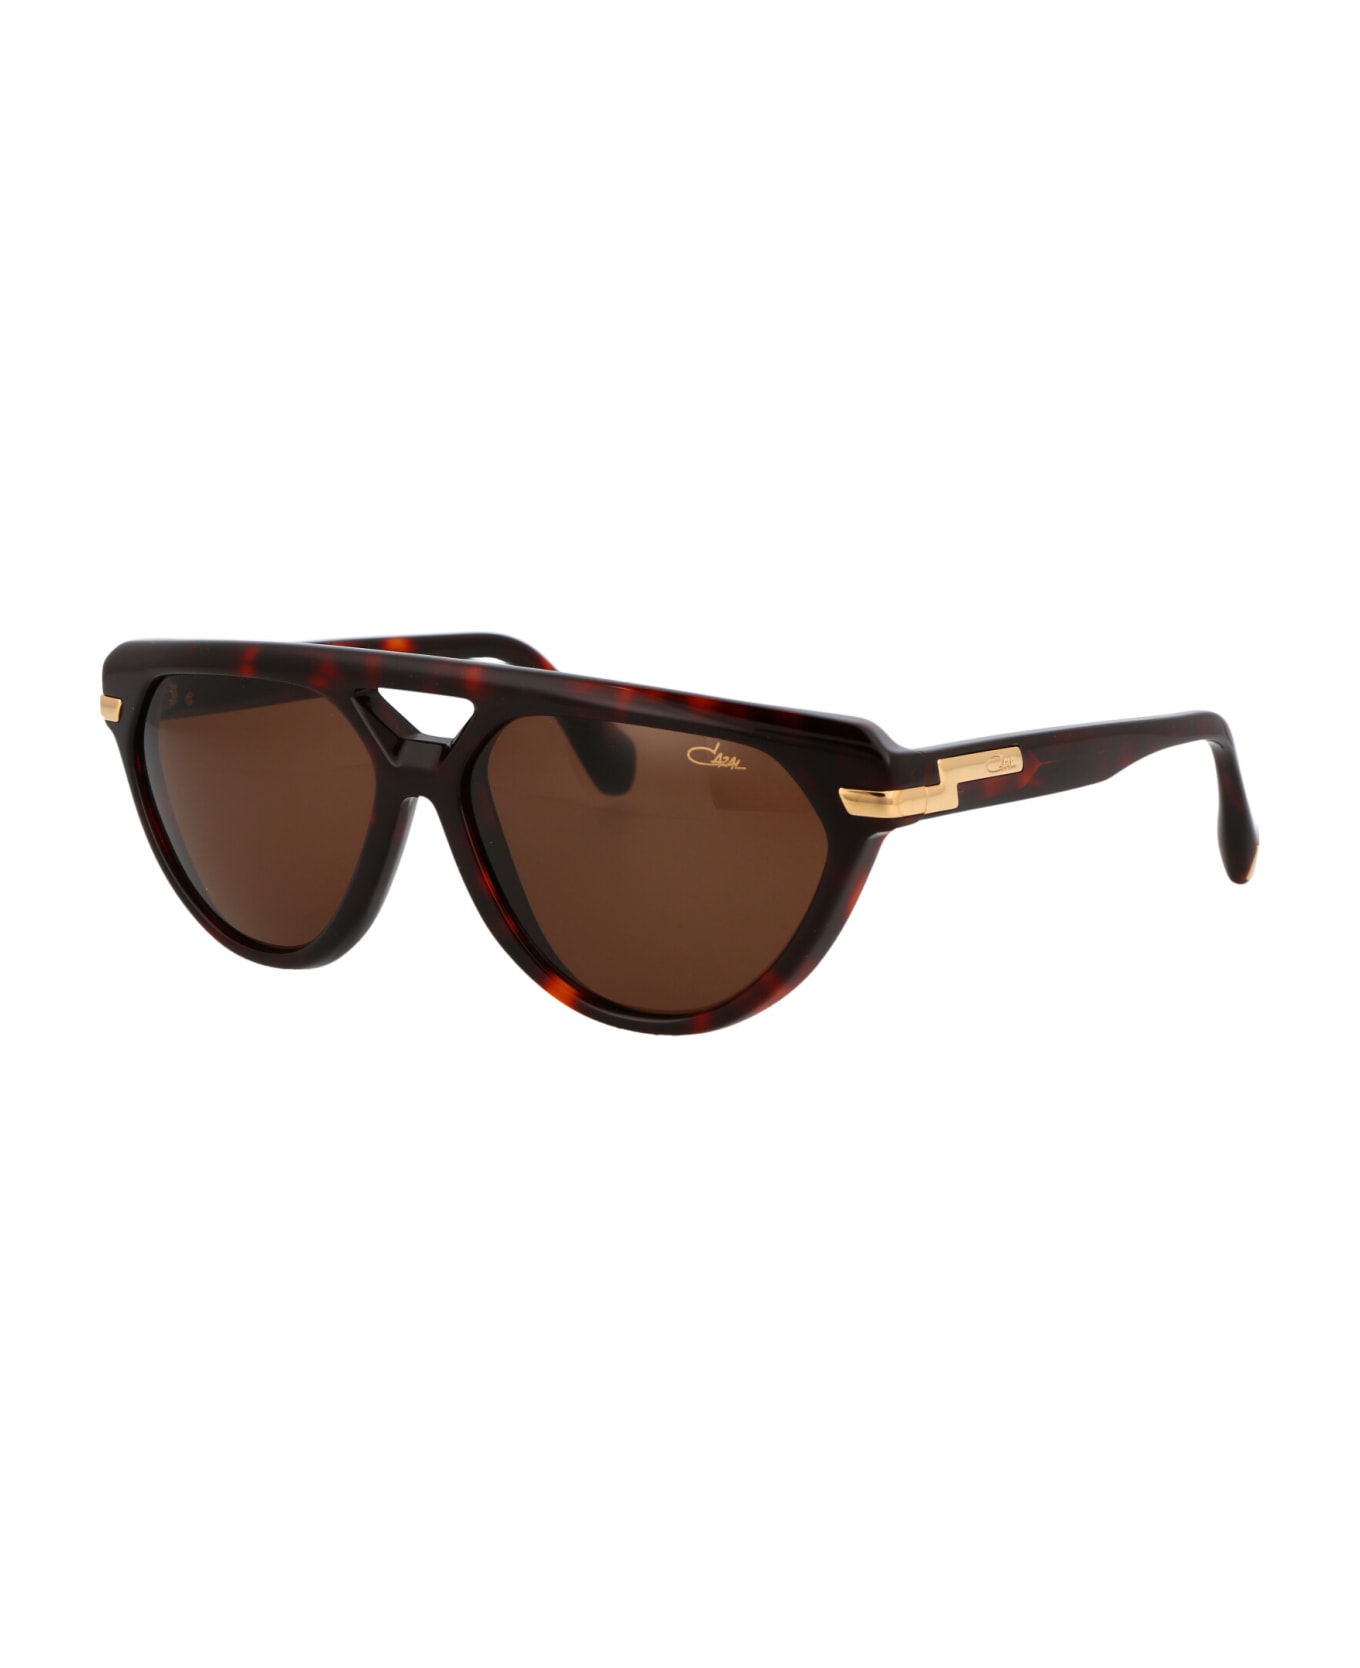 Cazal Mod. 8503 Sunglasses - 002 HAVANA